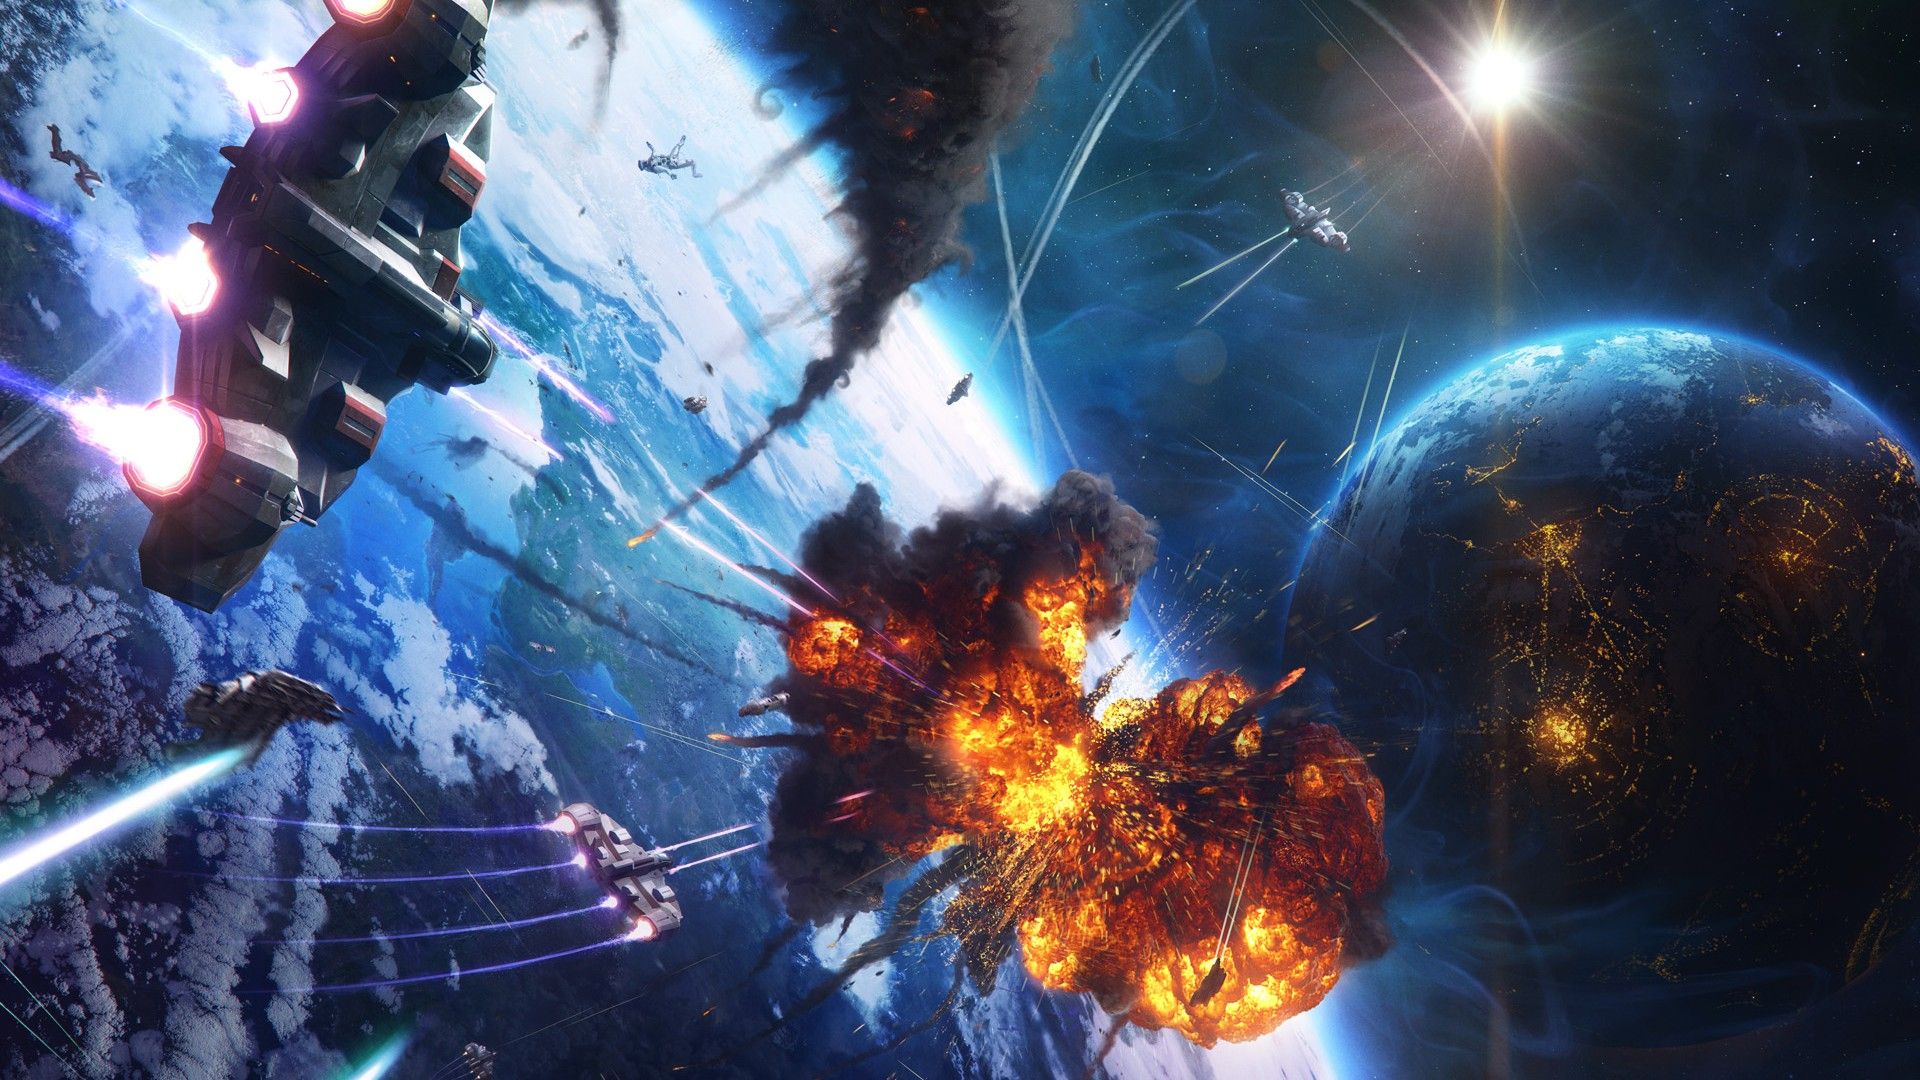 #space, #explosion, #science fiction, #planet, #battle, #spaceship, wallpaper. Mocah.org HD Wallpaper